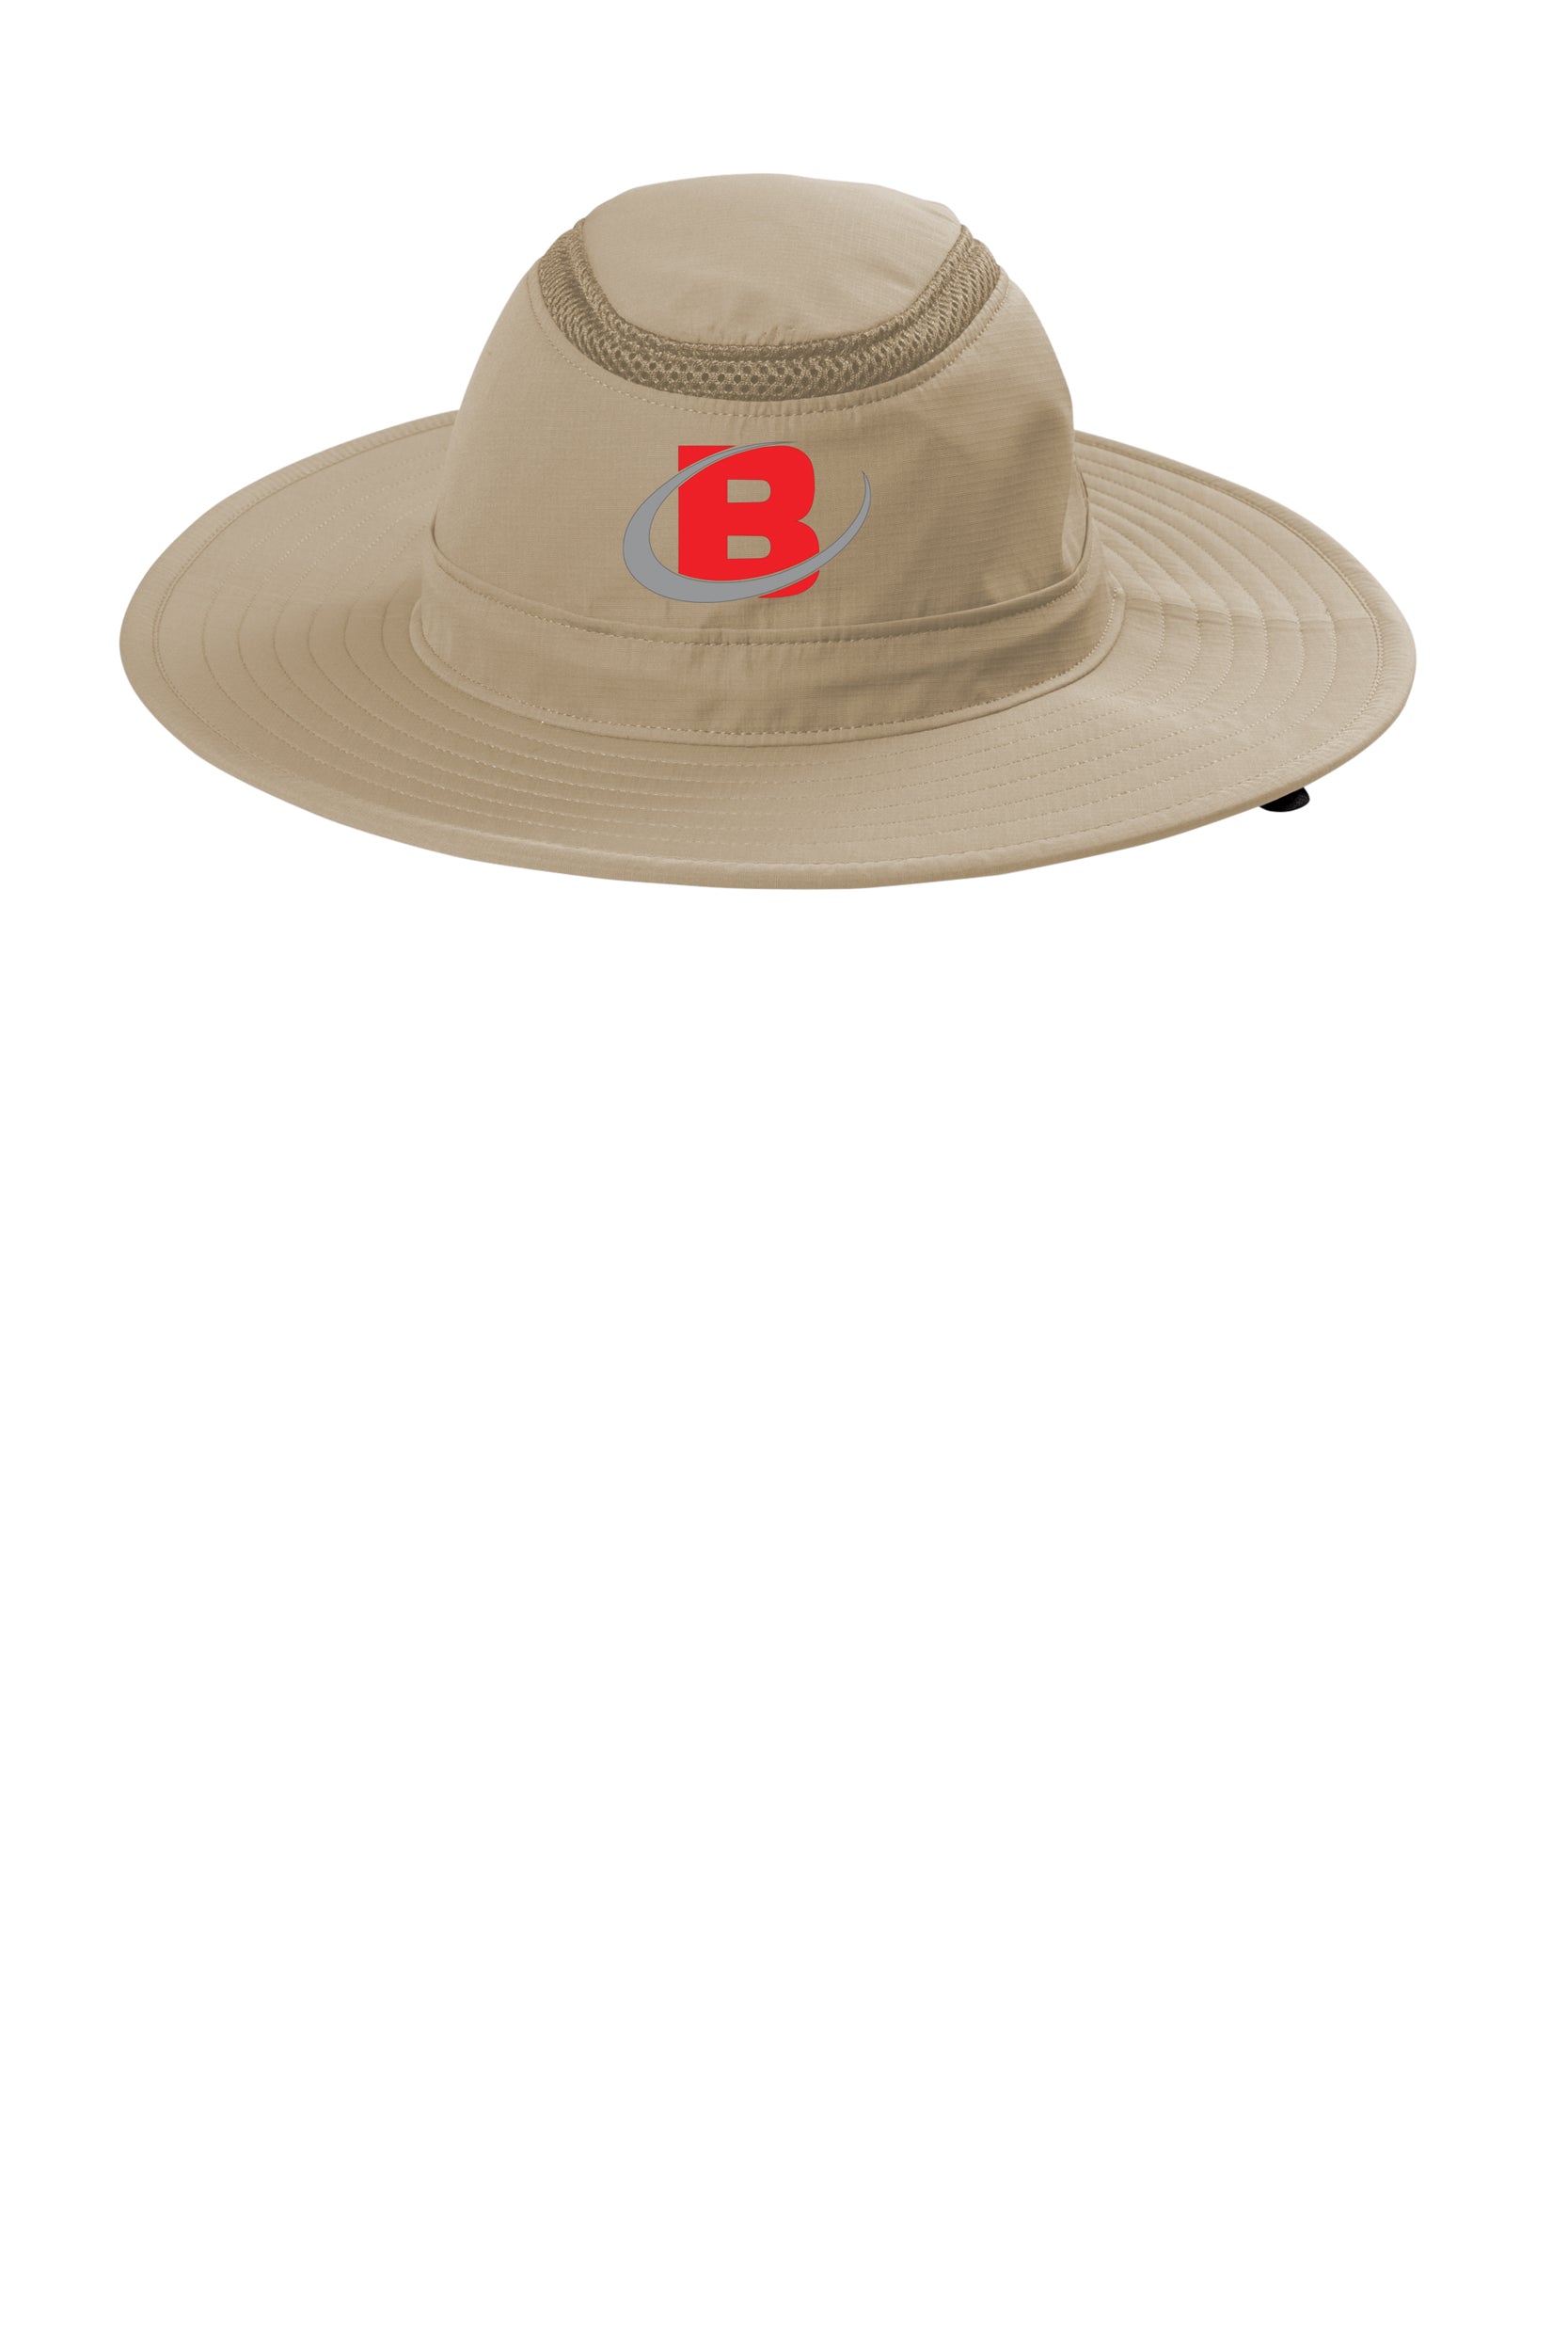 Bowman Excavating - Wide Brim Bucket Hat